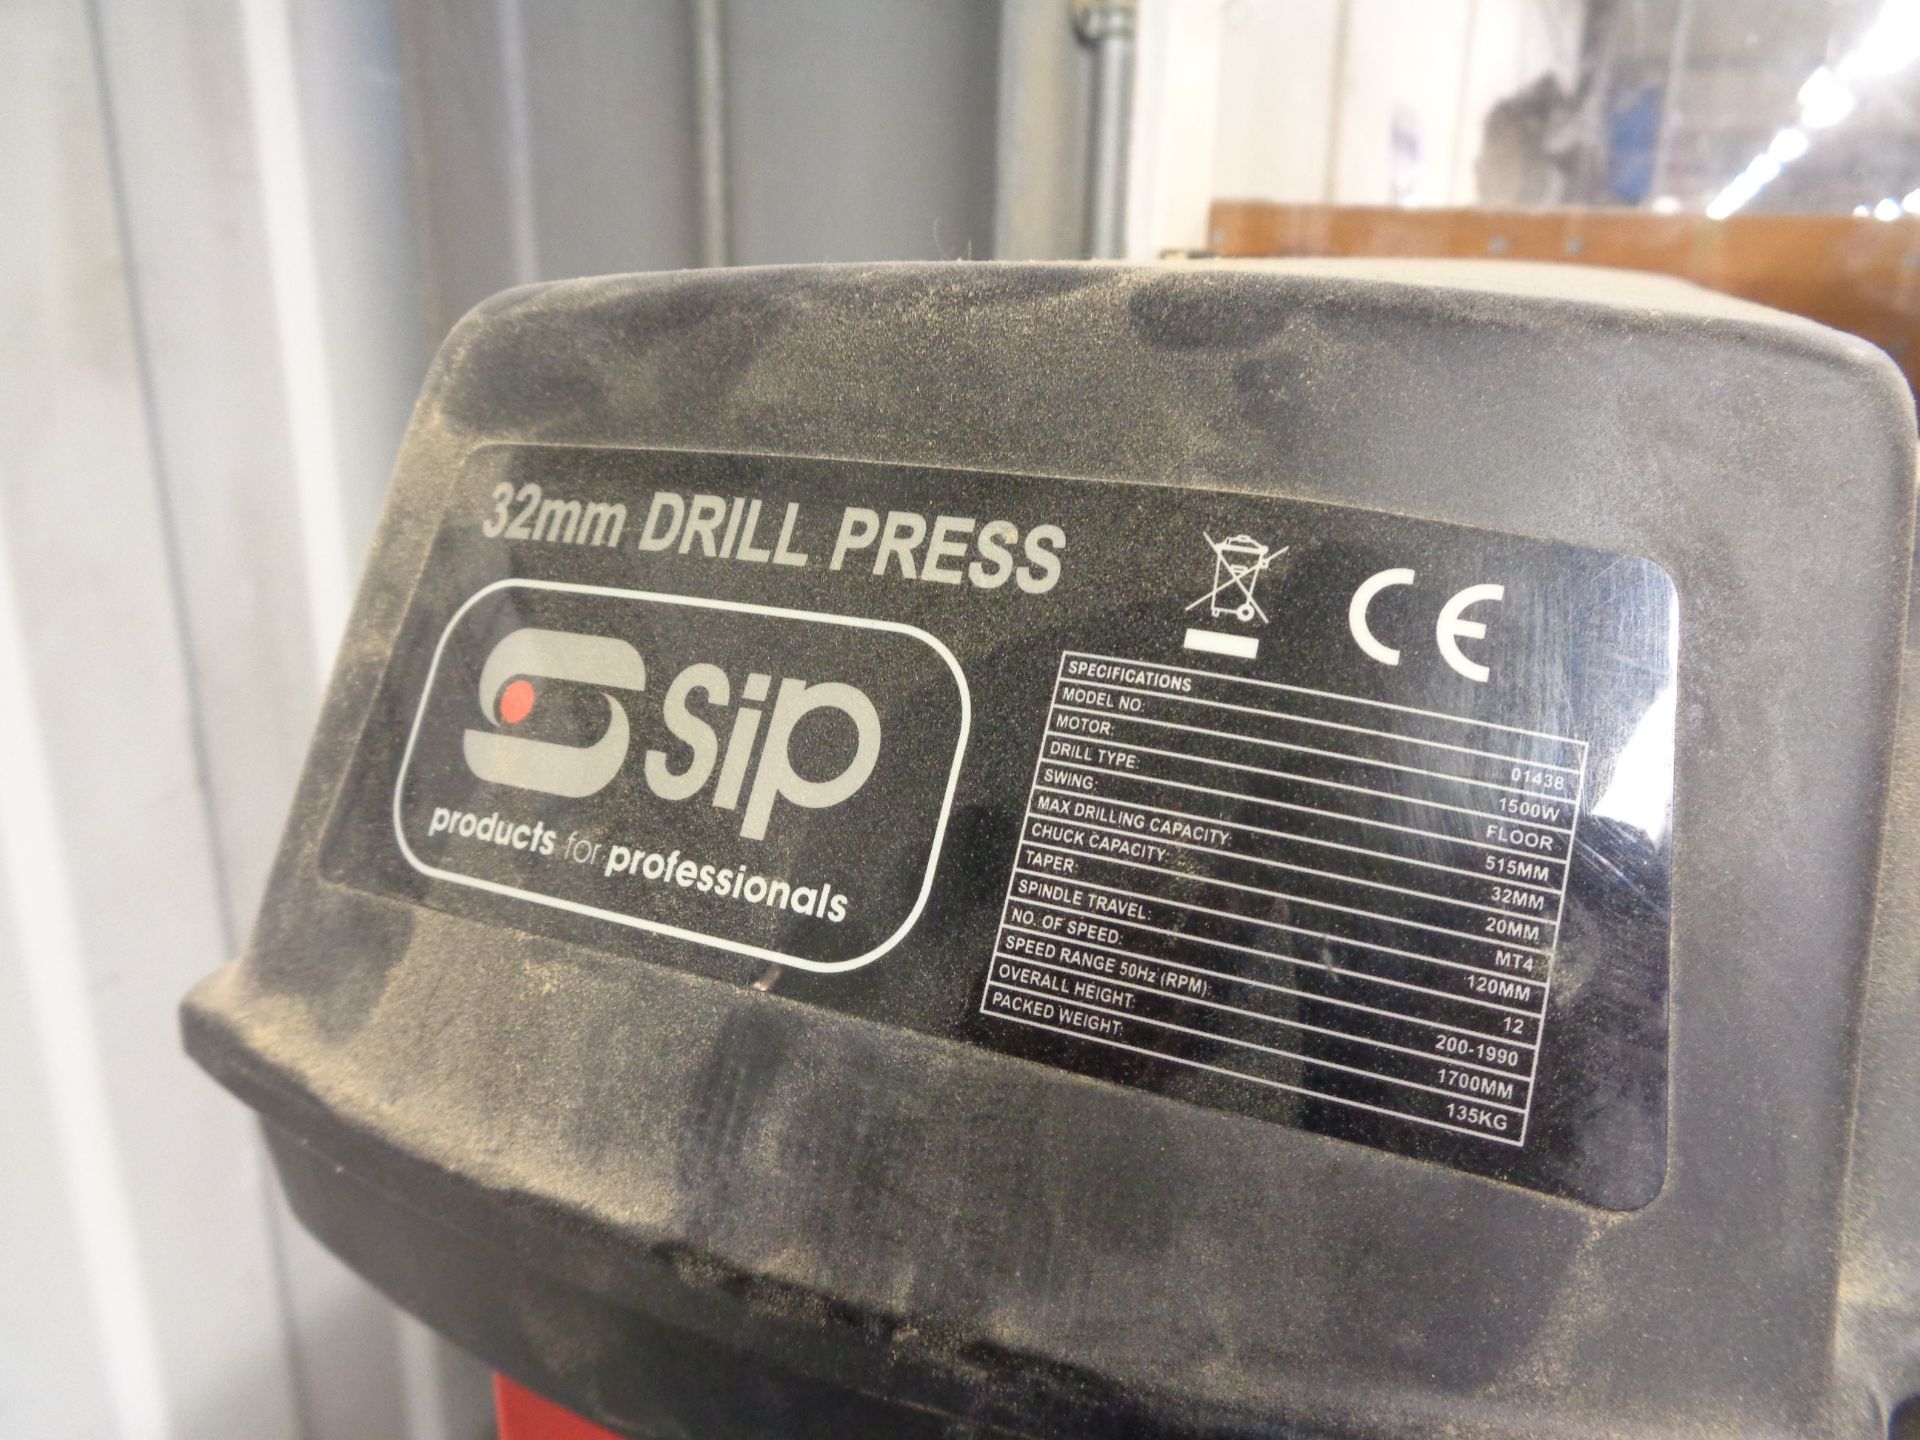 Sip 01438 32mm drill press, serial no. 43.10.09 - Bild 2 aus 4